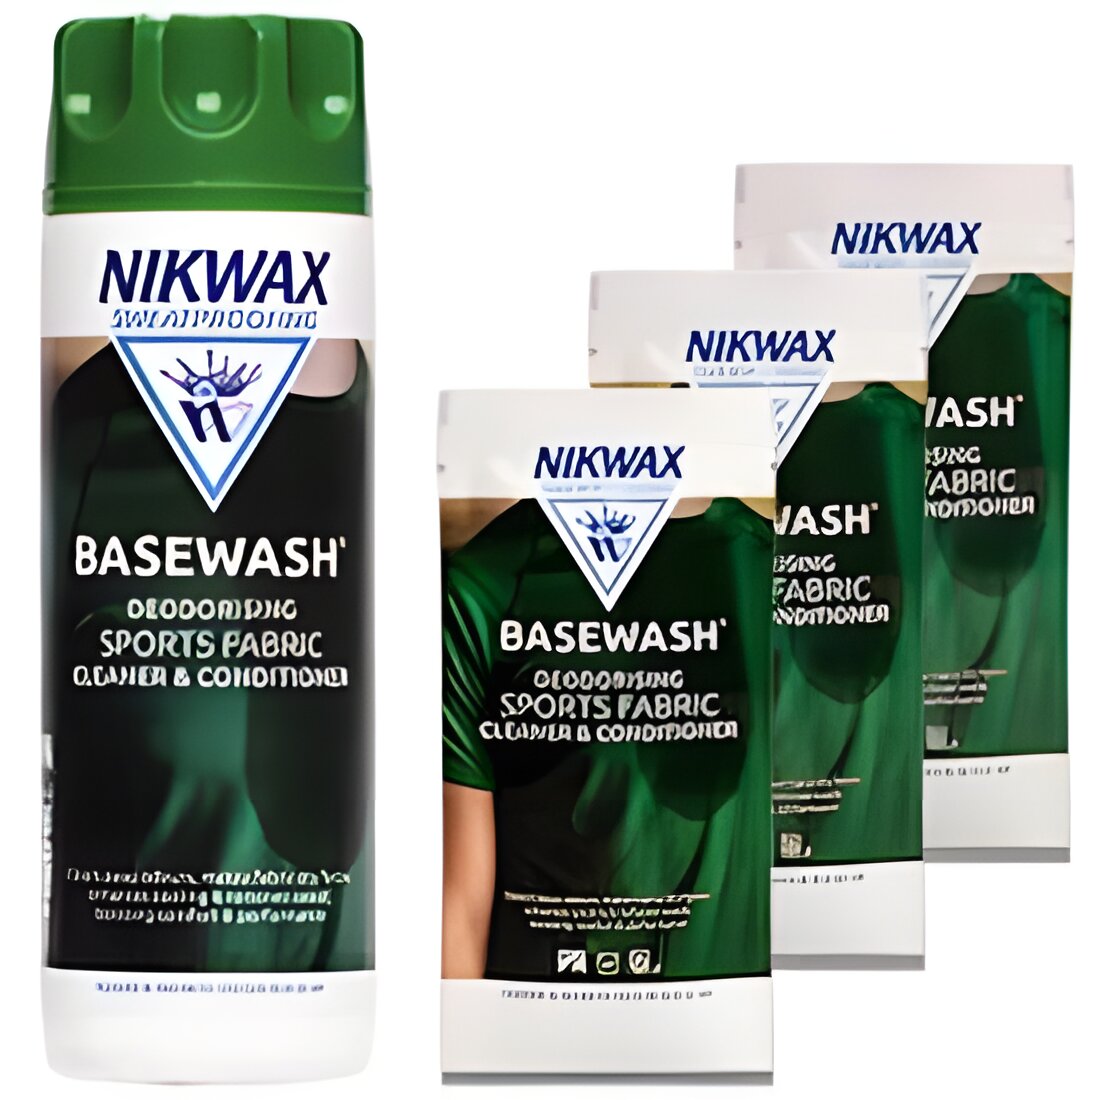 Free Nikwax BaseWash